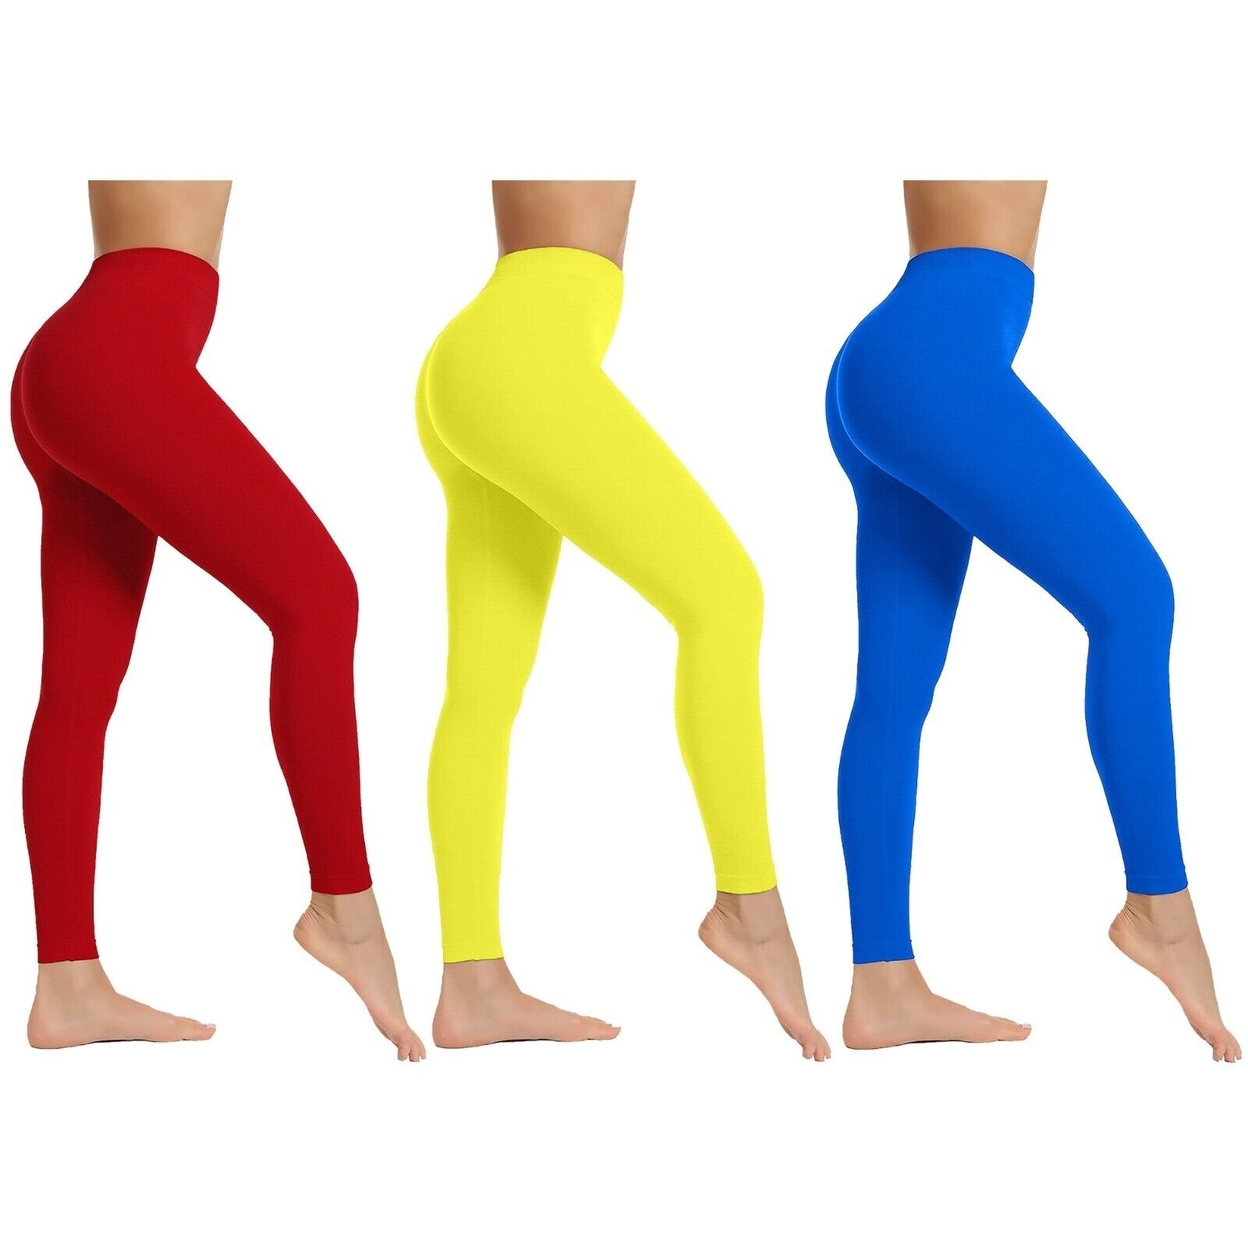 3-Pack: Women's High Waist Super Soft Active Athlete Stretch Yoga Cozy Leggings - Blue,blue,blue, Large